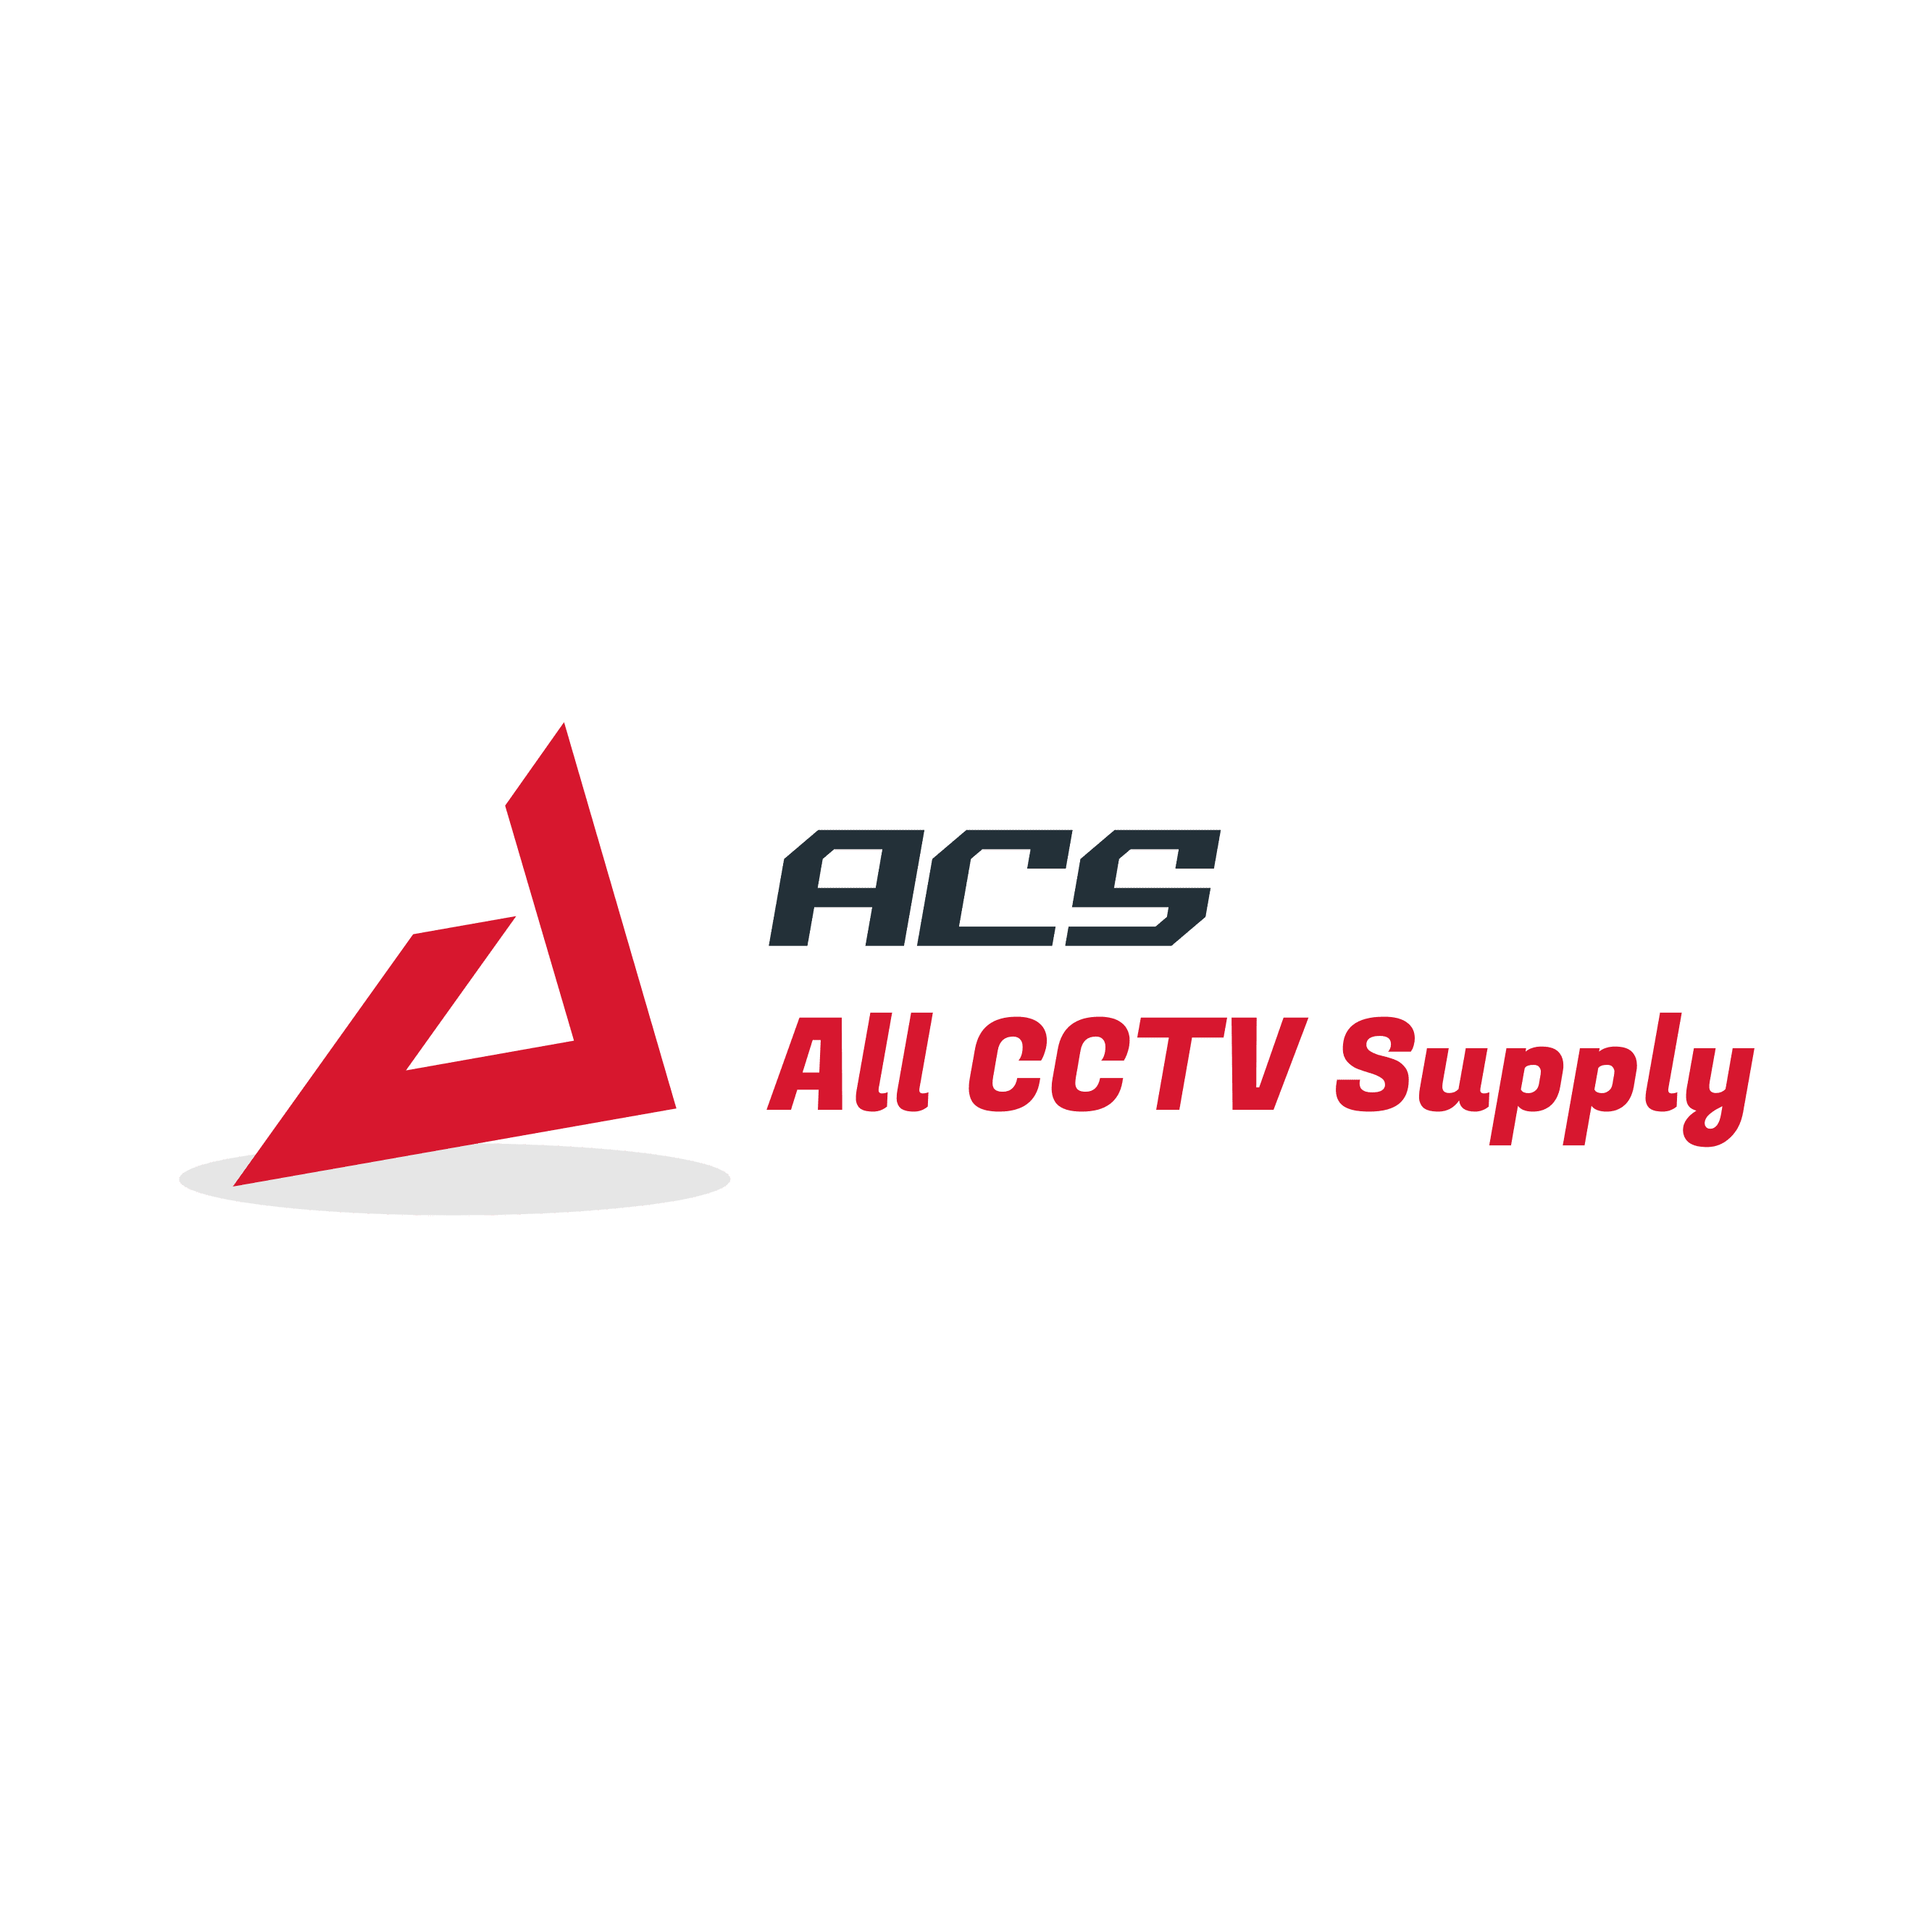 All CCTV Supply Photo